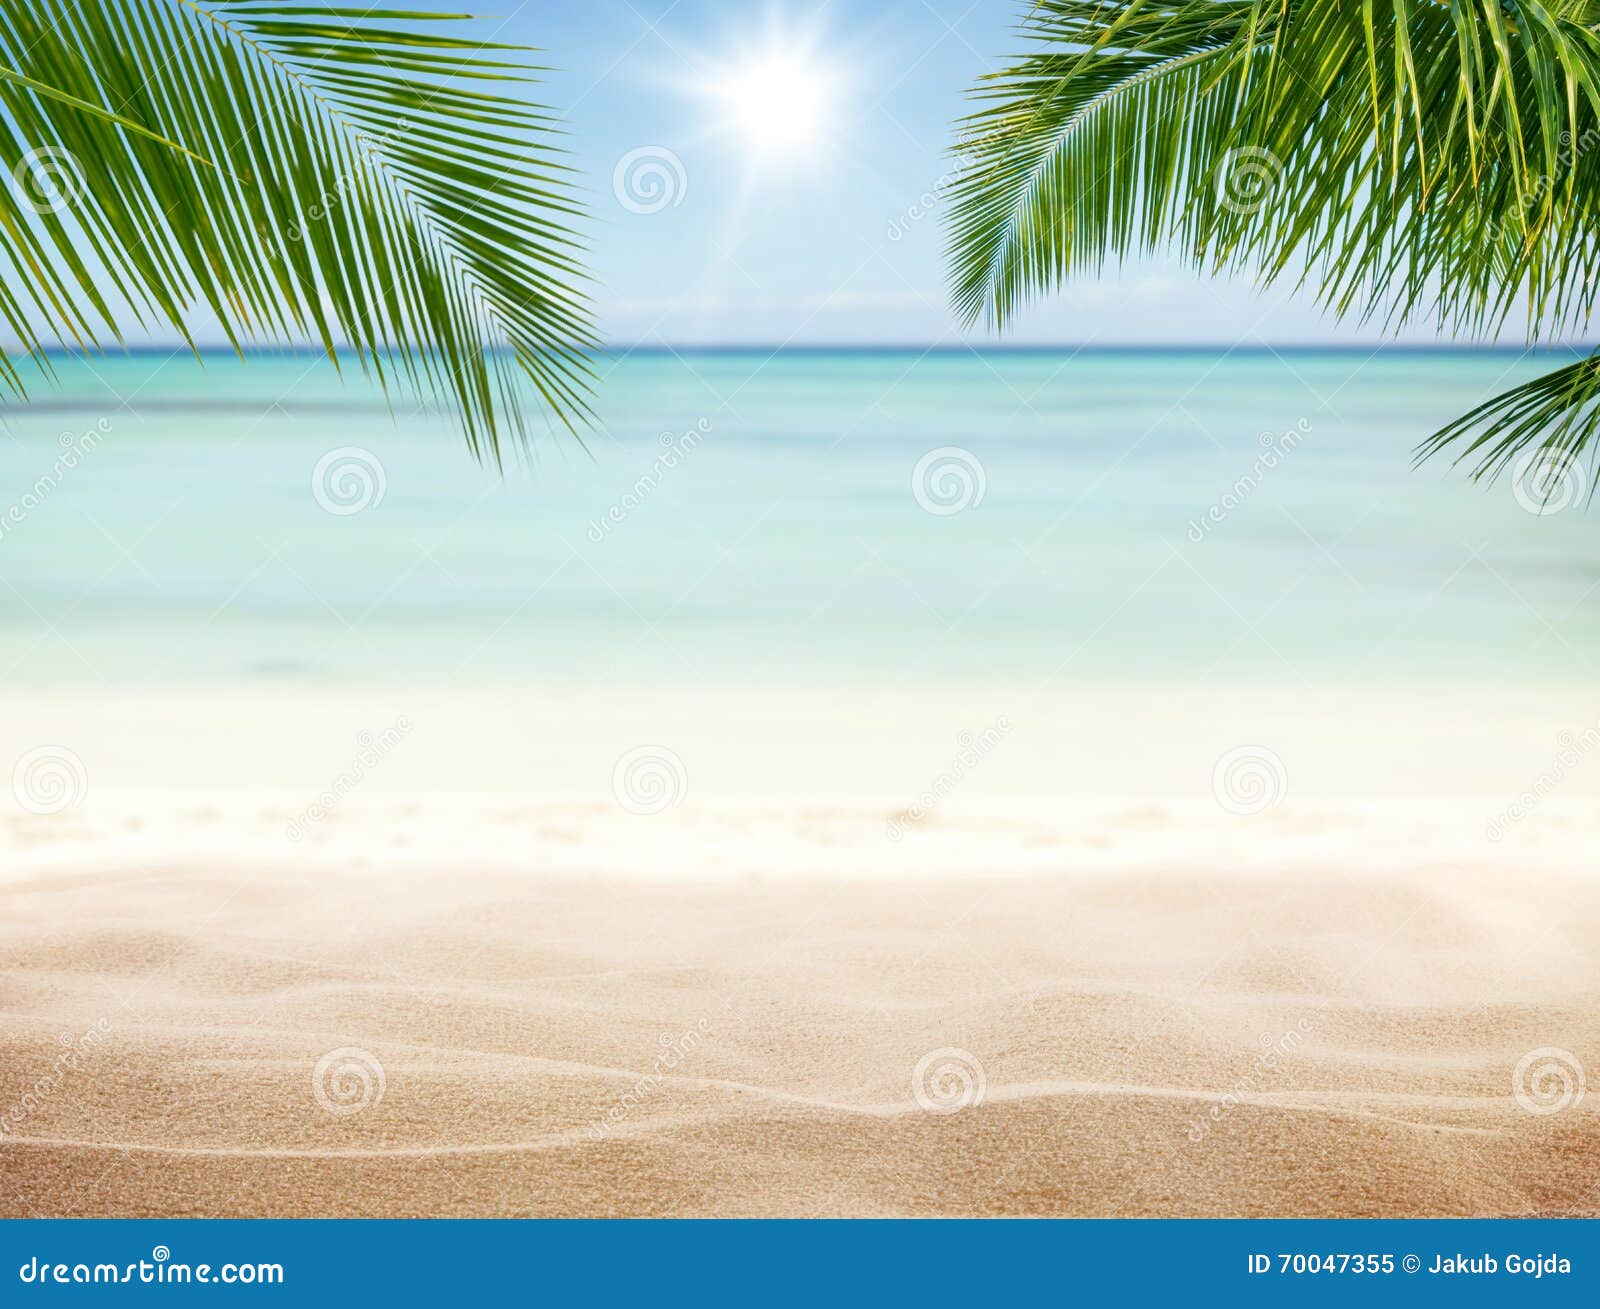 19,242 Beach Ocean Background Blur Stock Photos - Free & Royalty ...